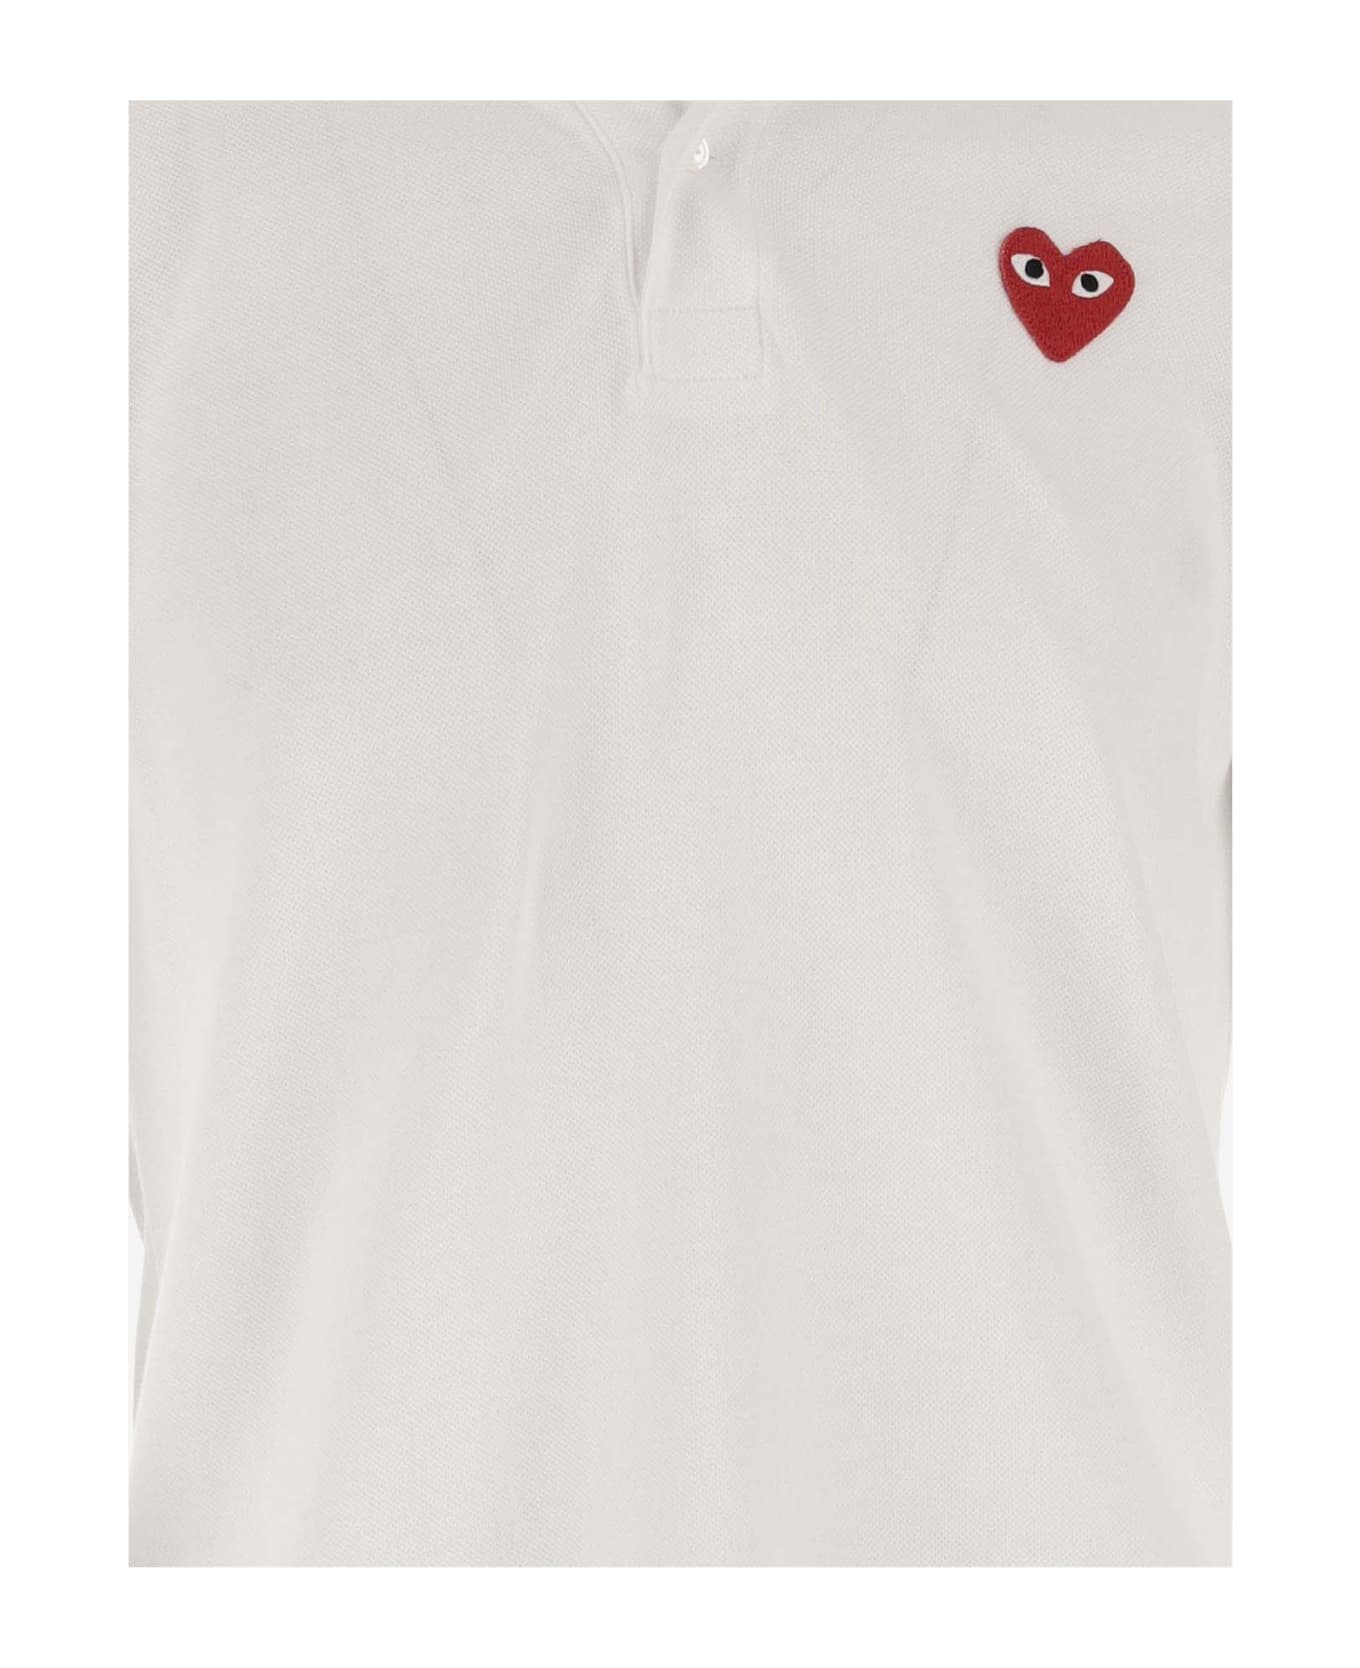 Comme des Garçons Cotton Polo Shirt With Logo - White